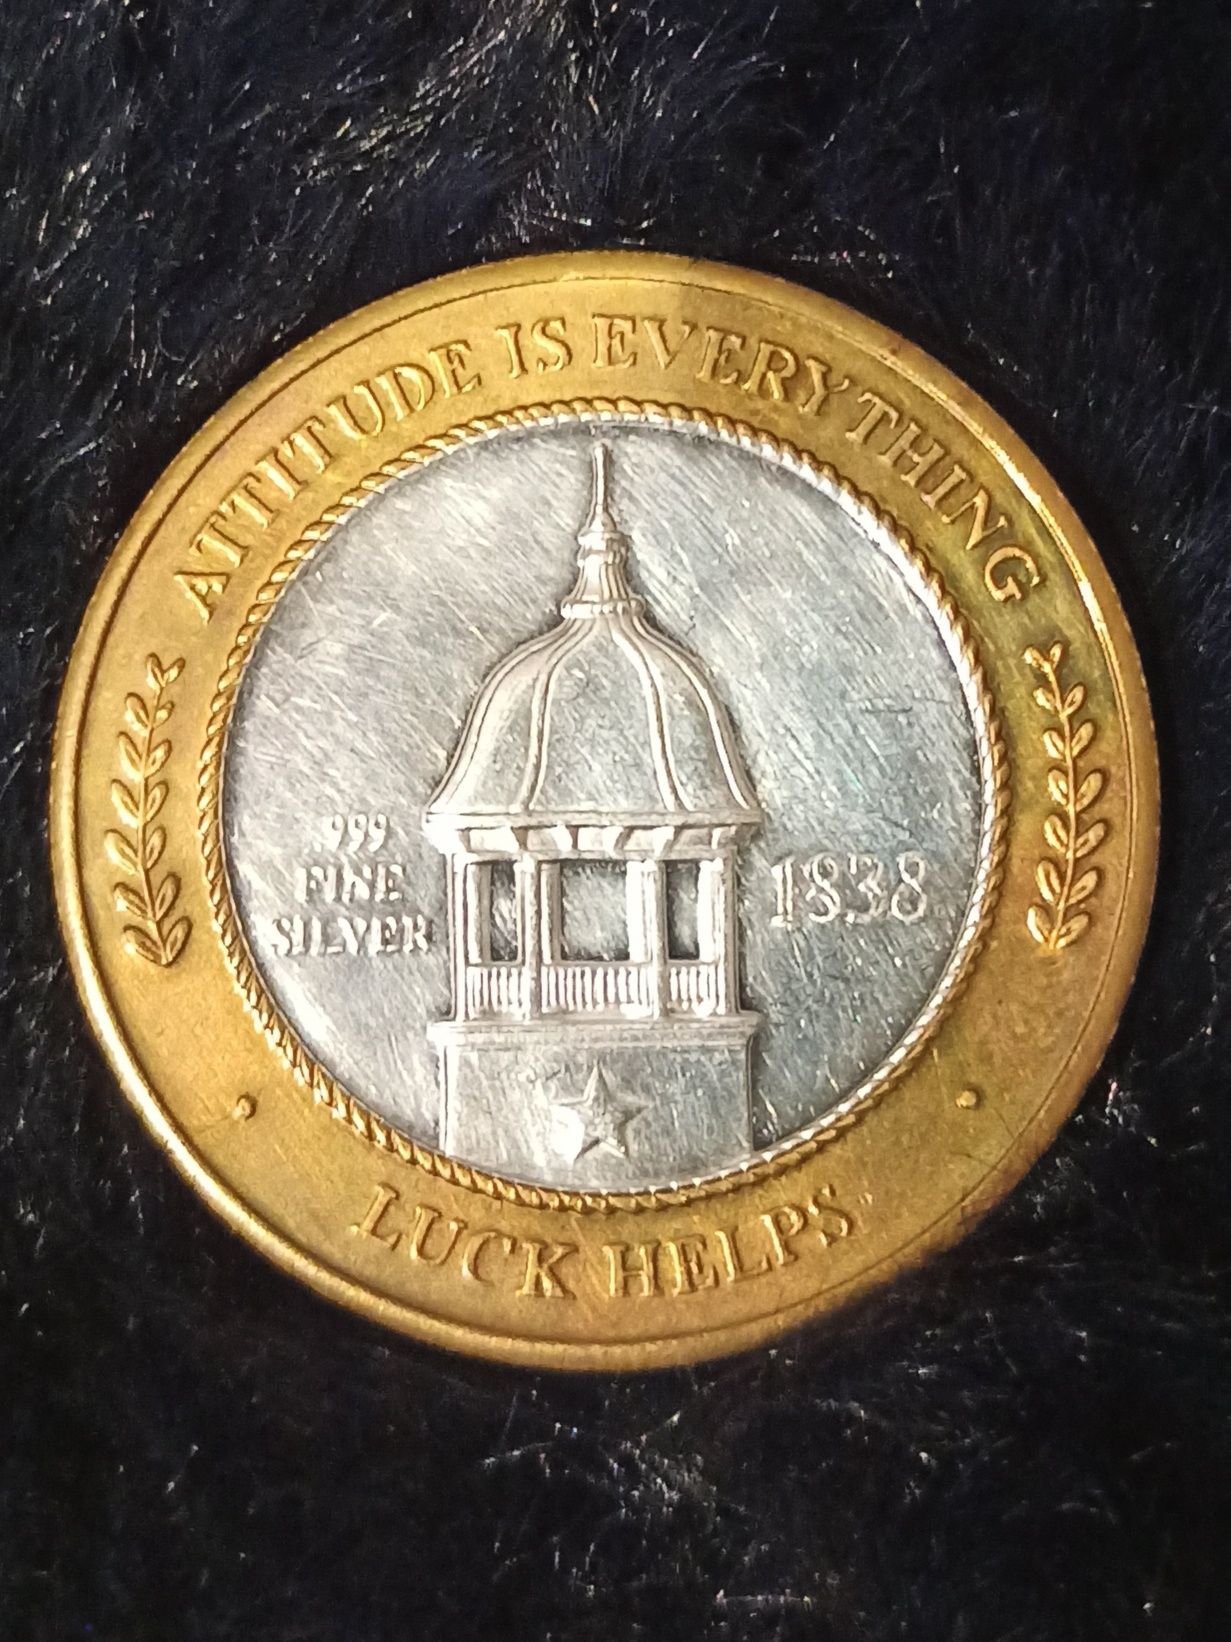 III Forks token/medal .999 fine silver